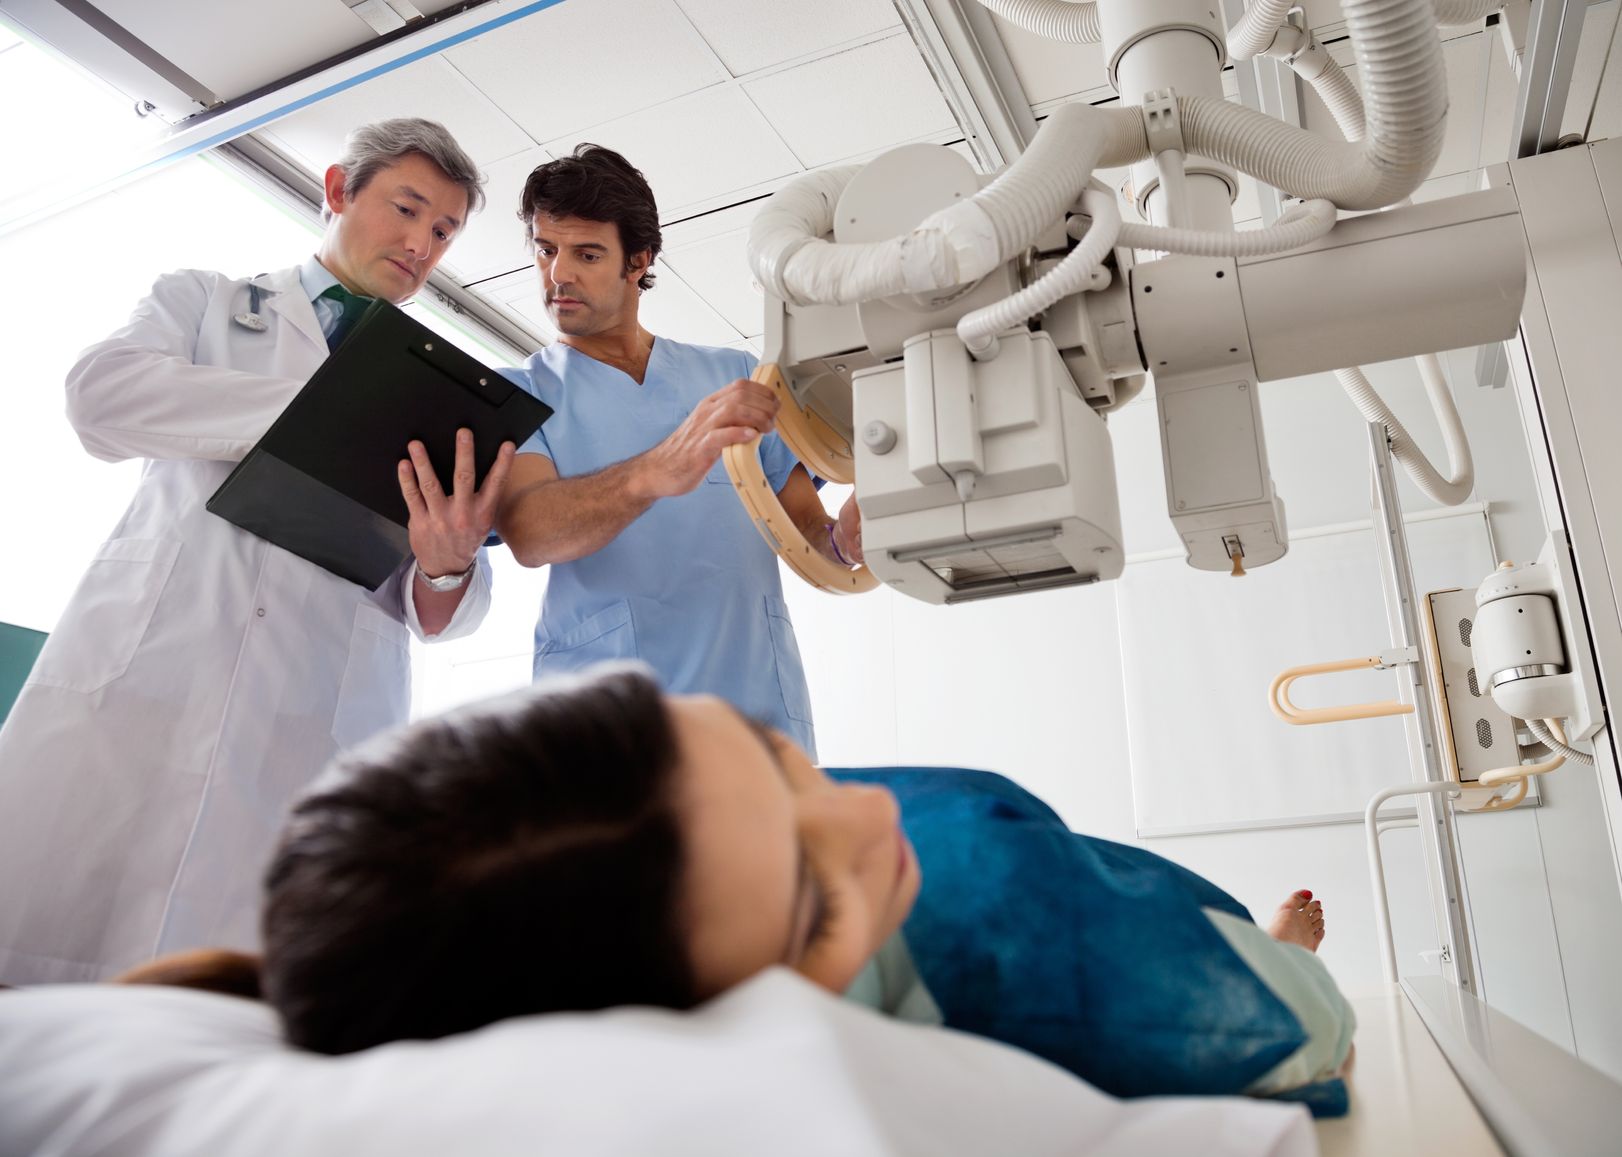 MRI Claustrophobia Tips